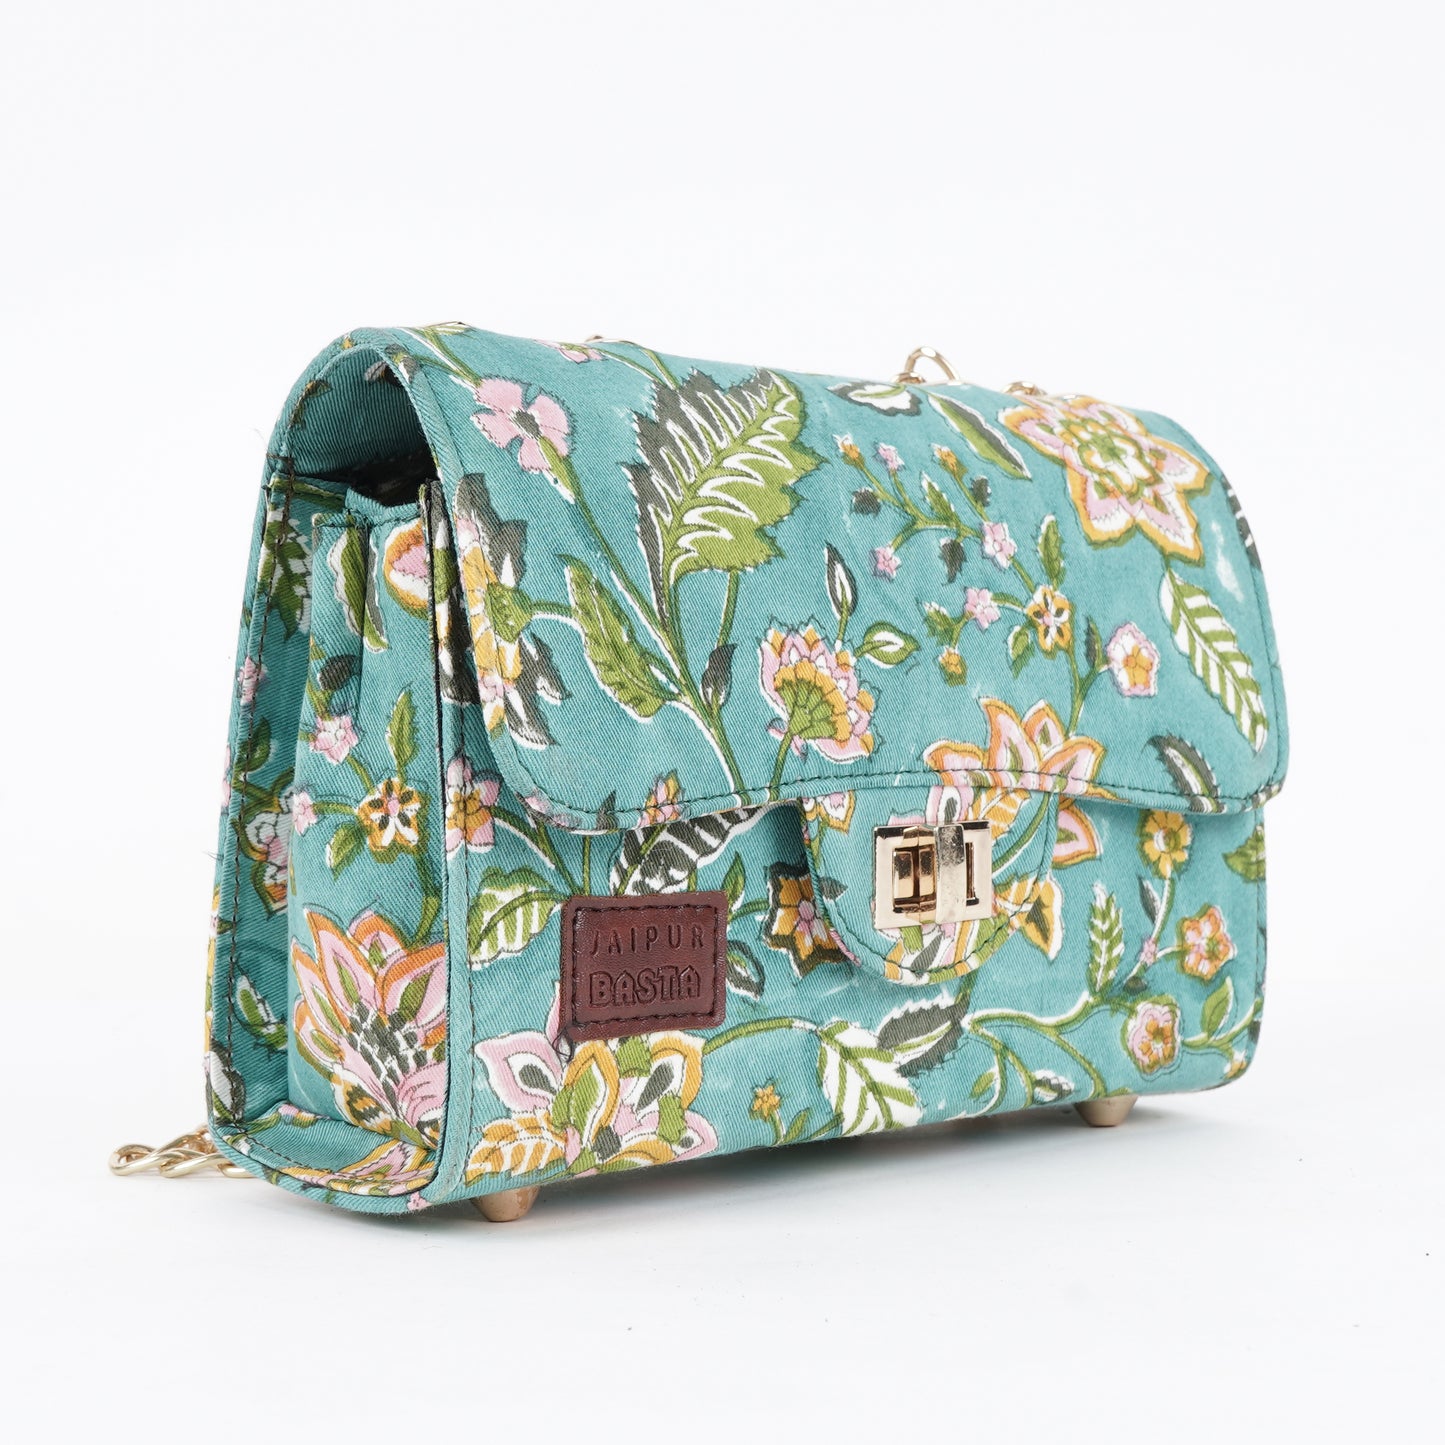 Tiffany Blue Satchel Bag